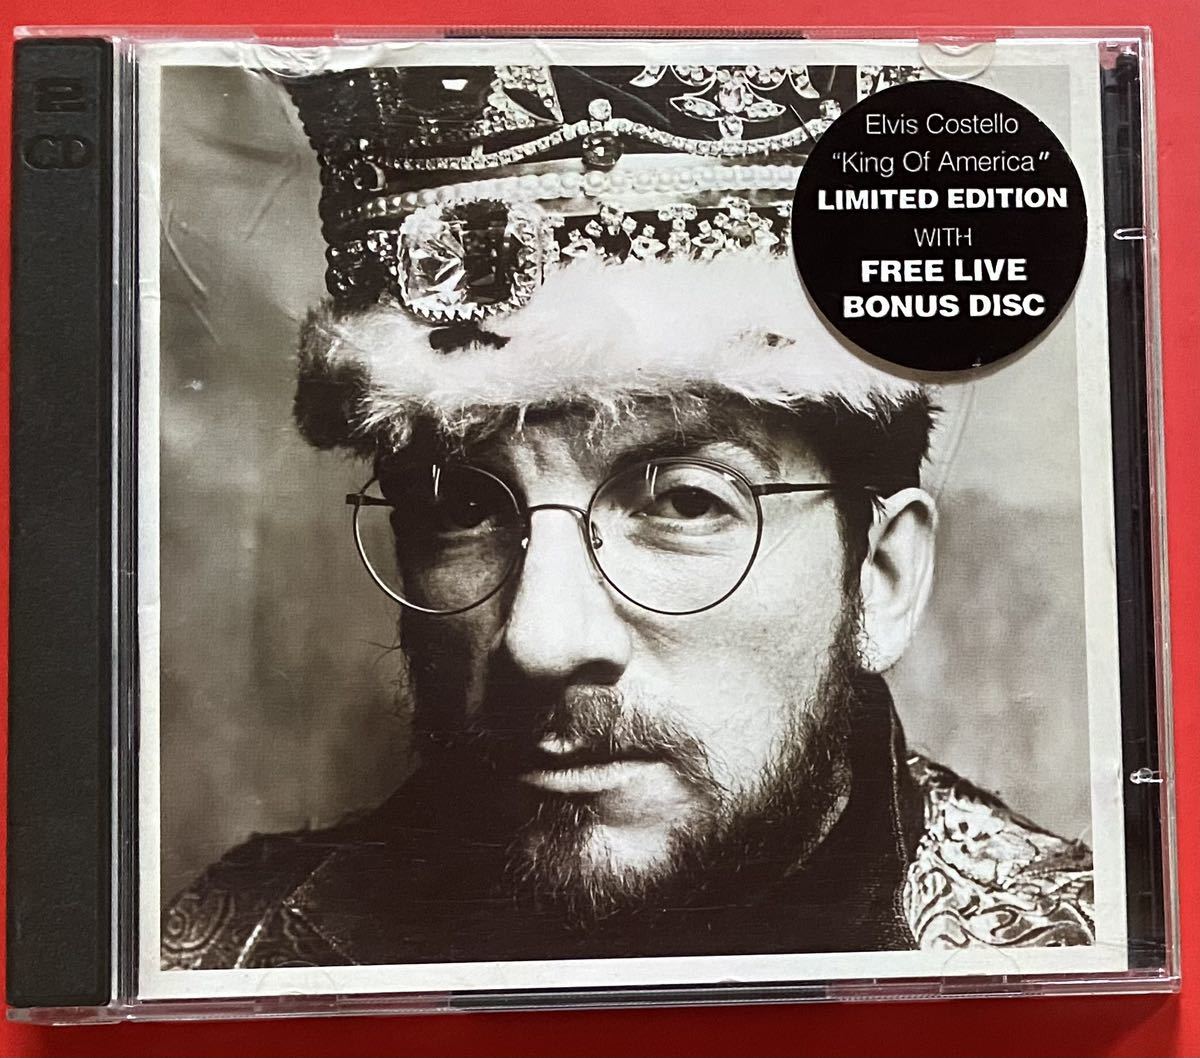 【2CD】コステロ・ショウ(エルヴィス・コステロ)「King Of America」Costello Show(Elvis Costello) 輸入盤 ボーナスディスク付 [10170424]_画像1